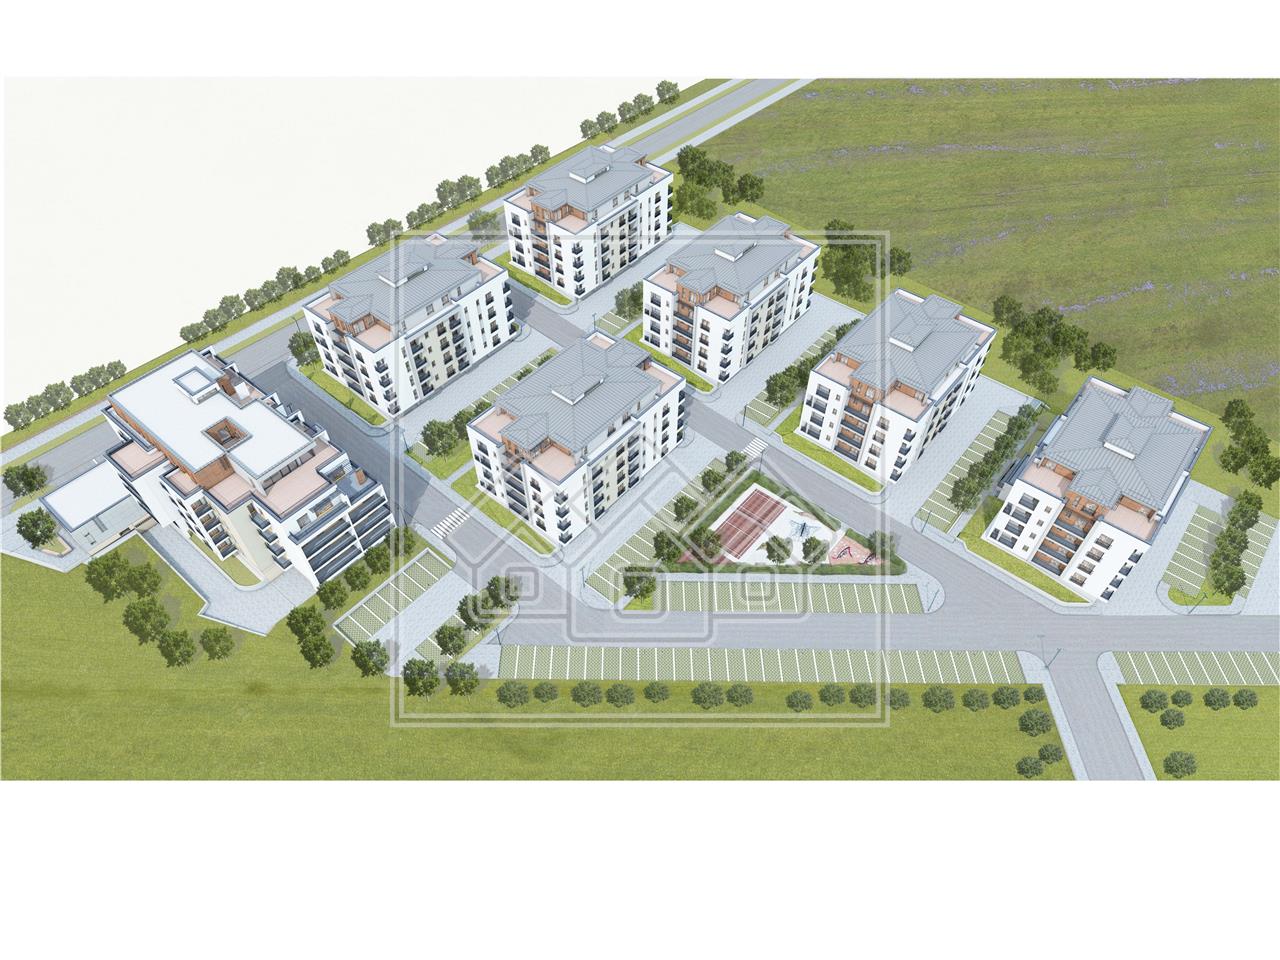 Apartament de vanzare in Sibiu - C3 - finisat  - Intabulat